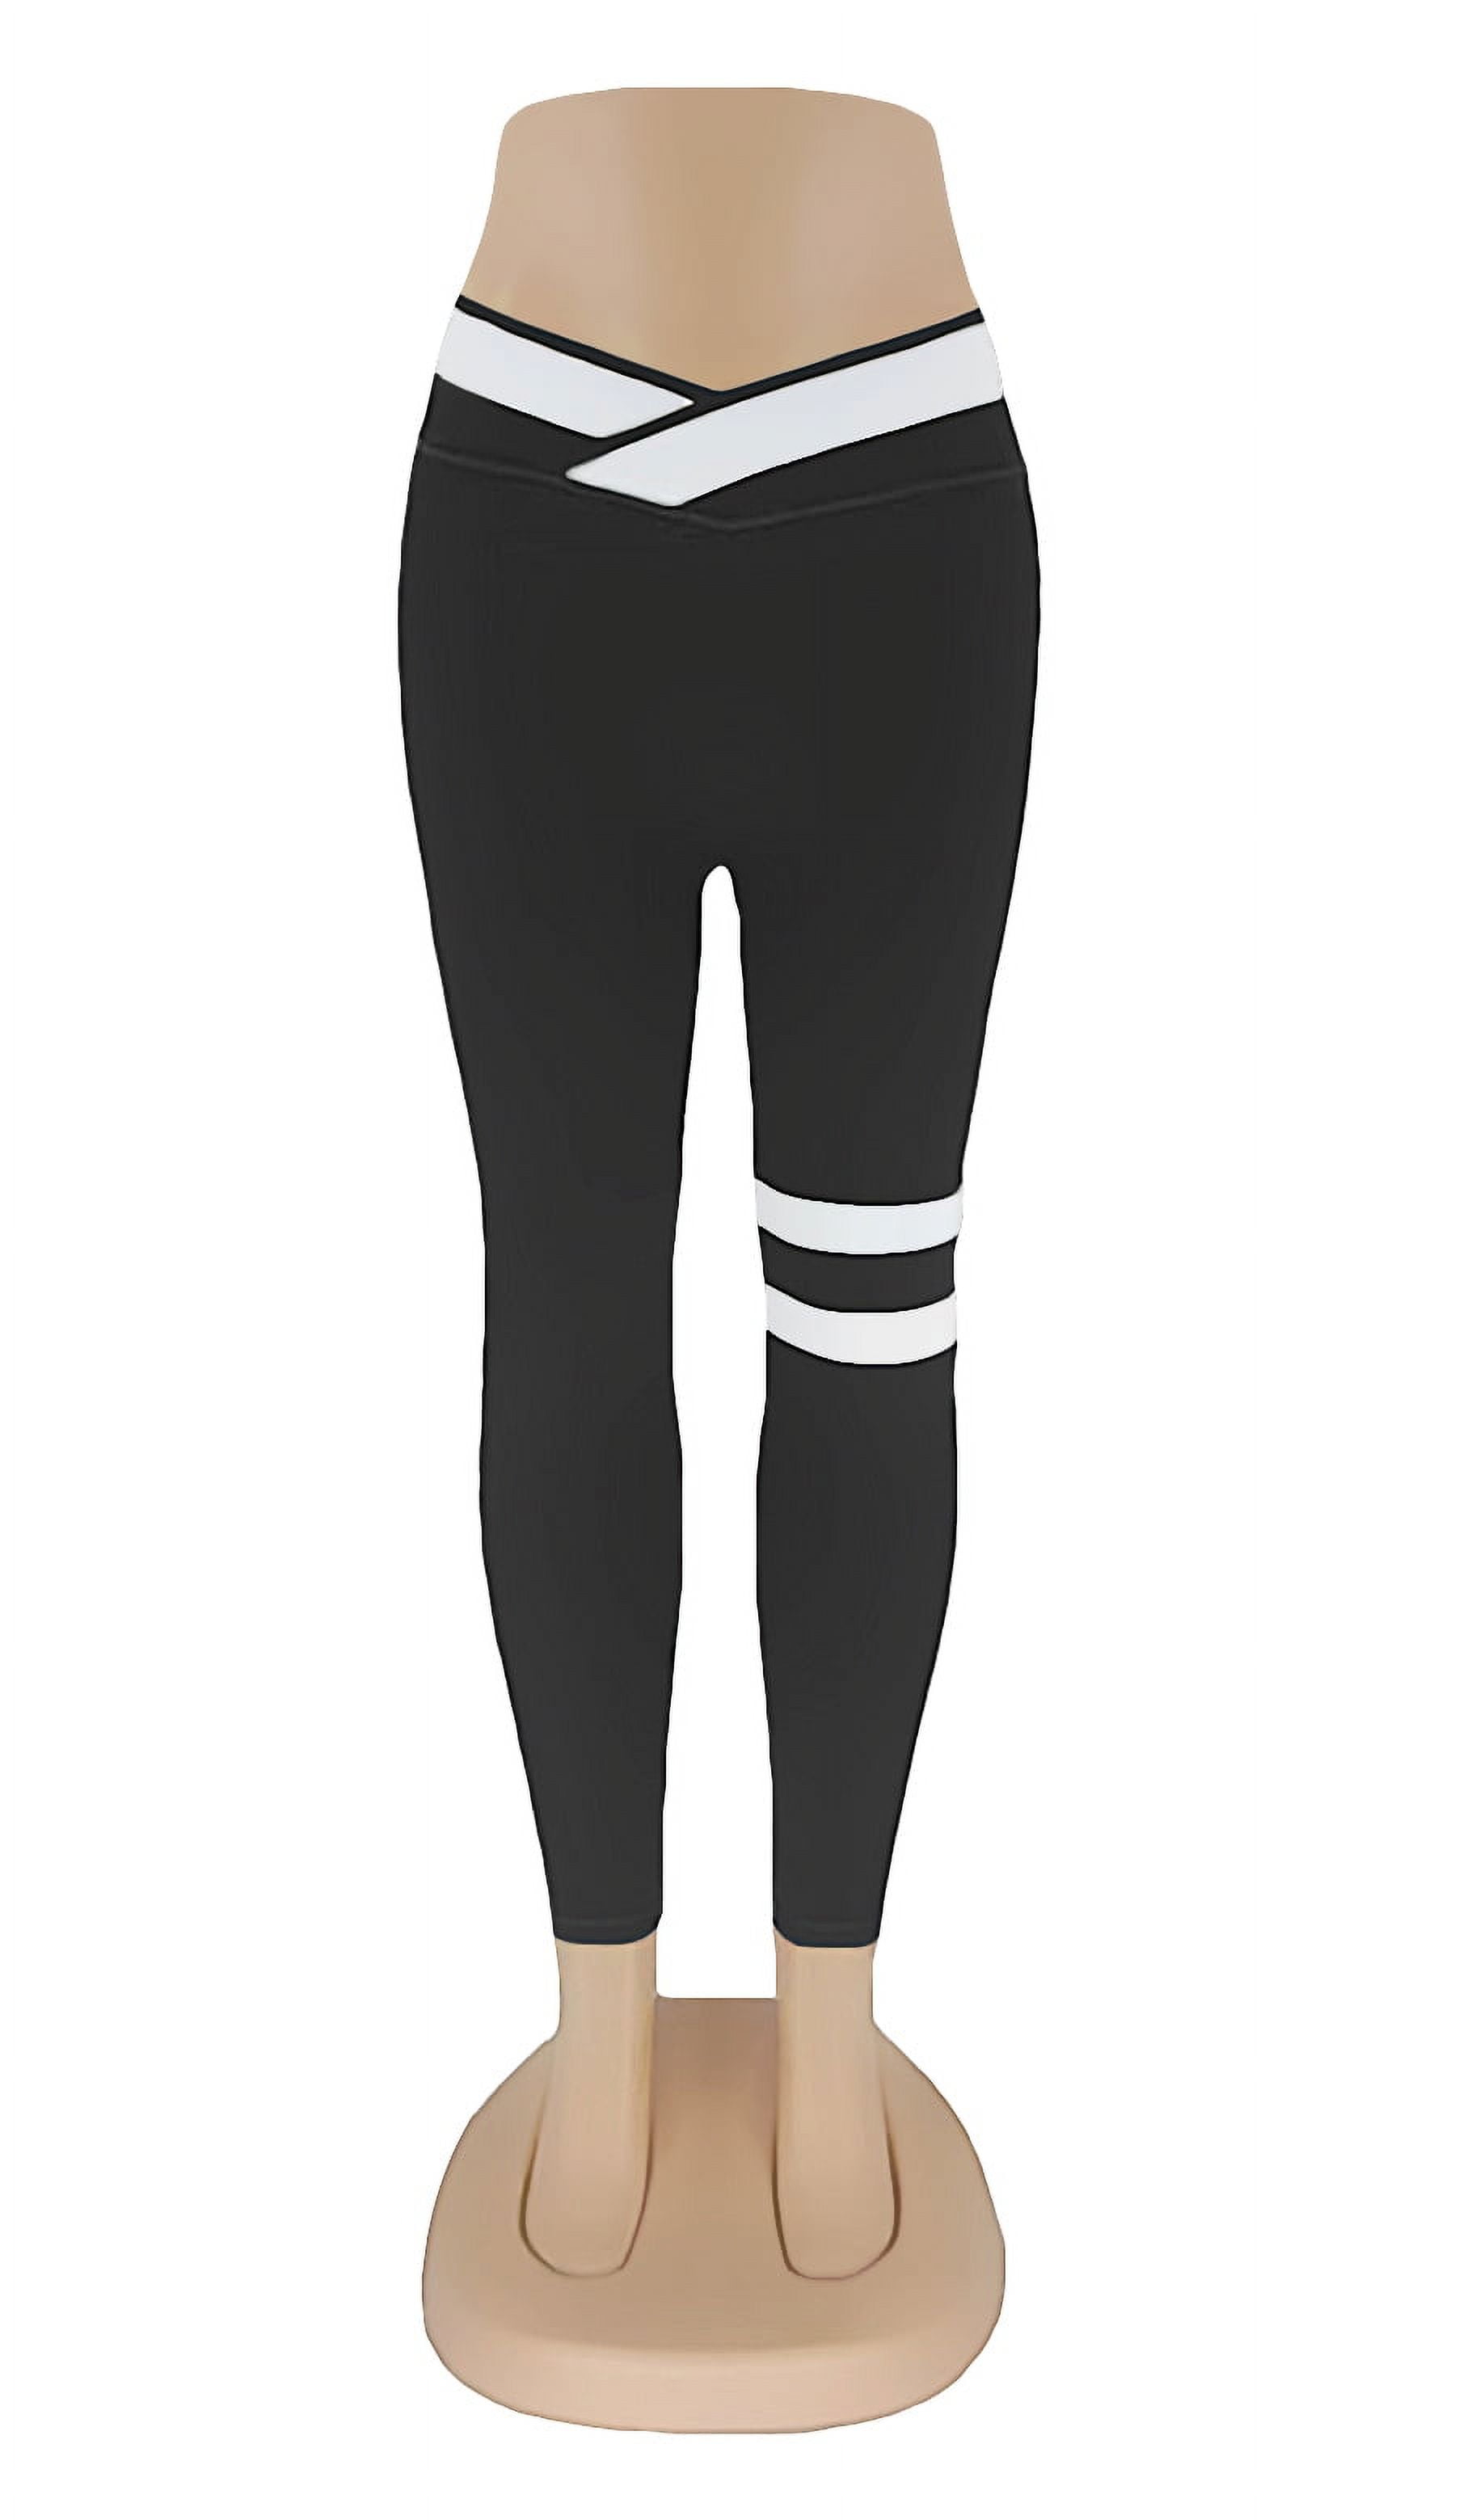 BUBBLELIME 2931333537 4 Styles Womens High Waist Bootcut Yoga Pants - Basic  Nylon_SHADOWcHARcOAL M-33 Inseam